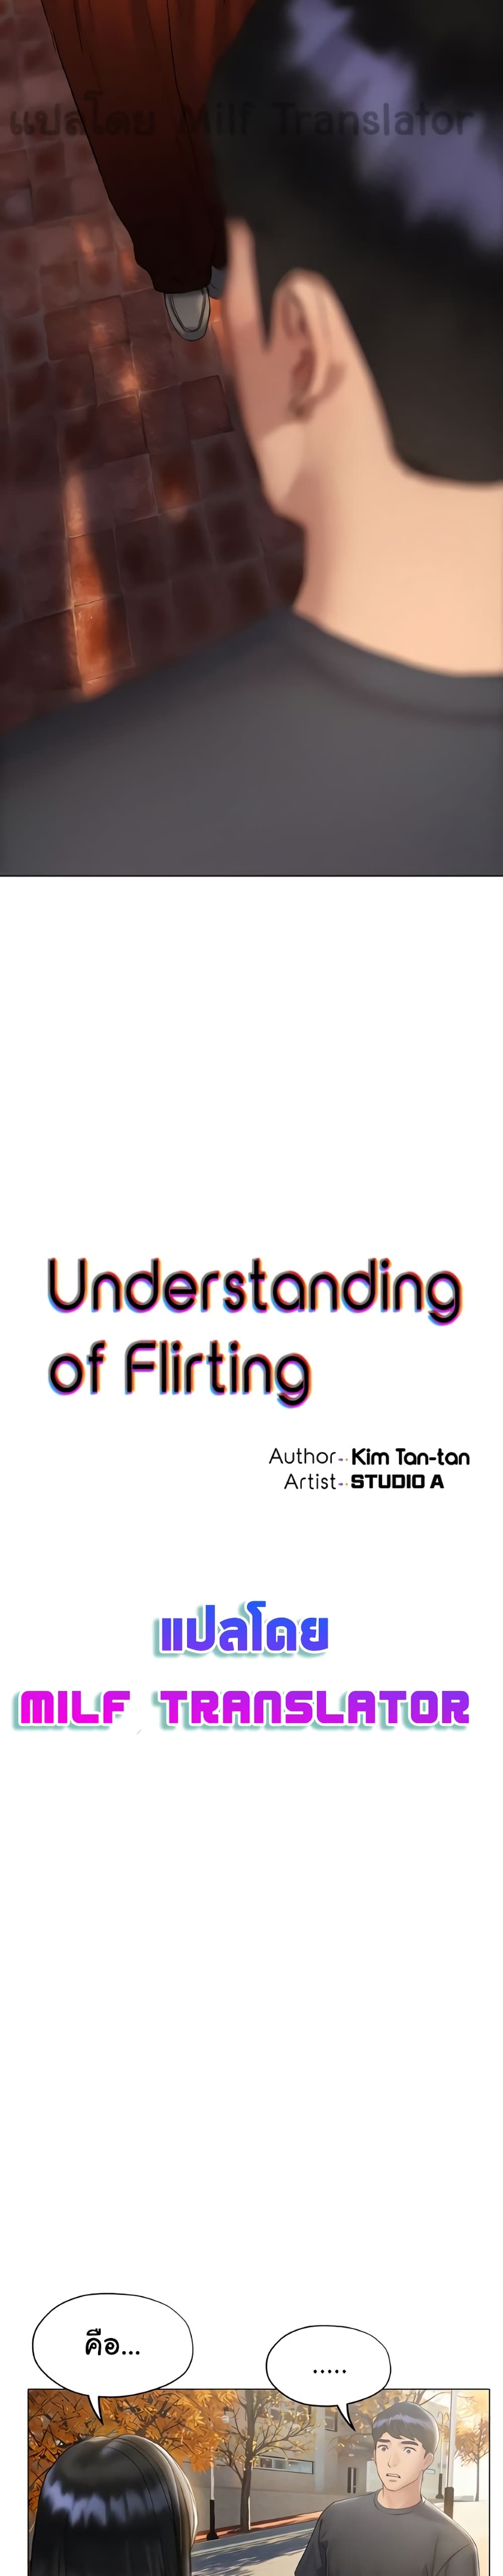 Understanding of Flirting 15 (4)